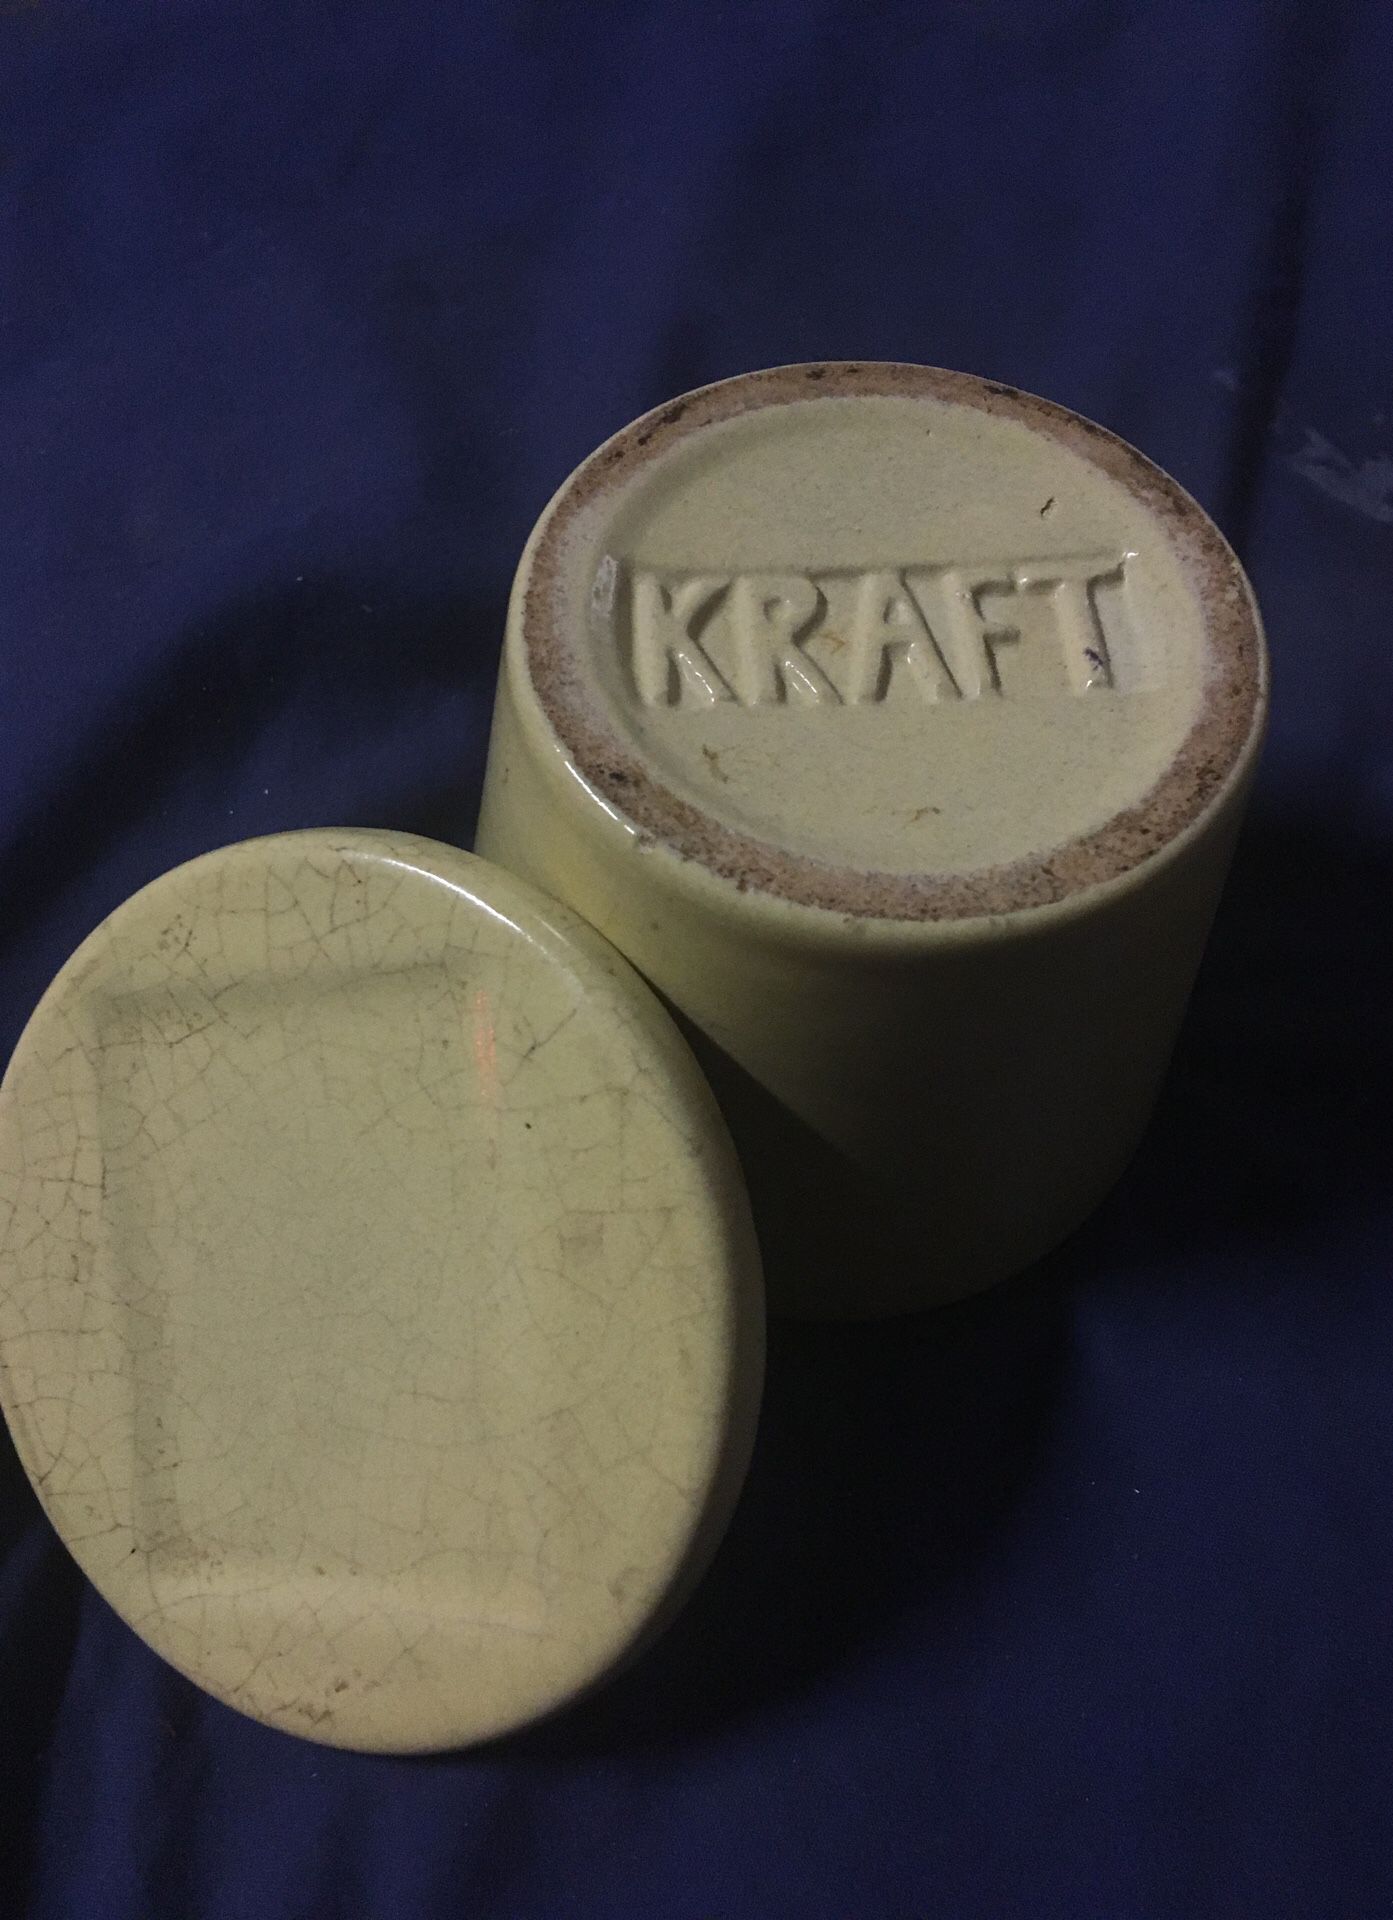 Kraft cheese Jar